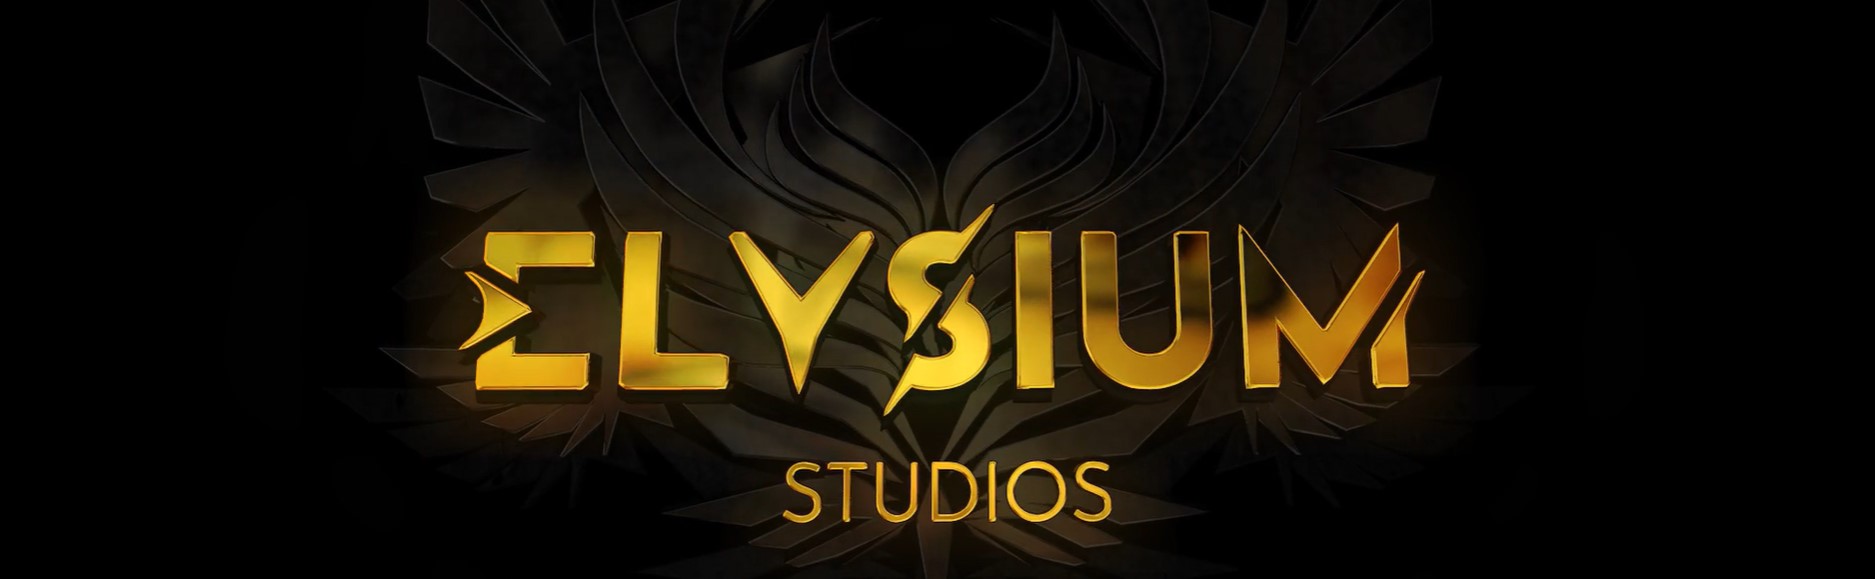 elysium studios banner